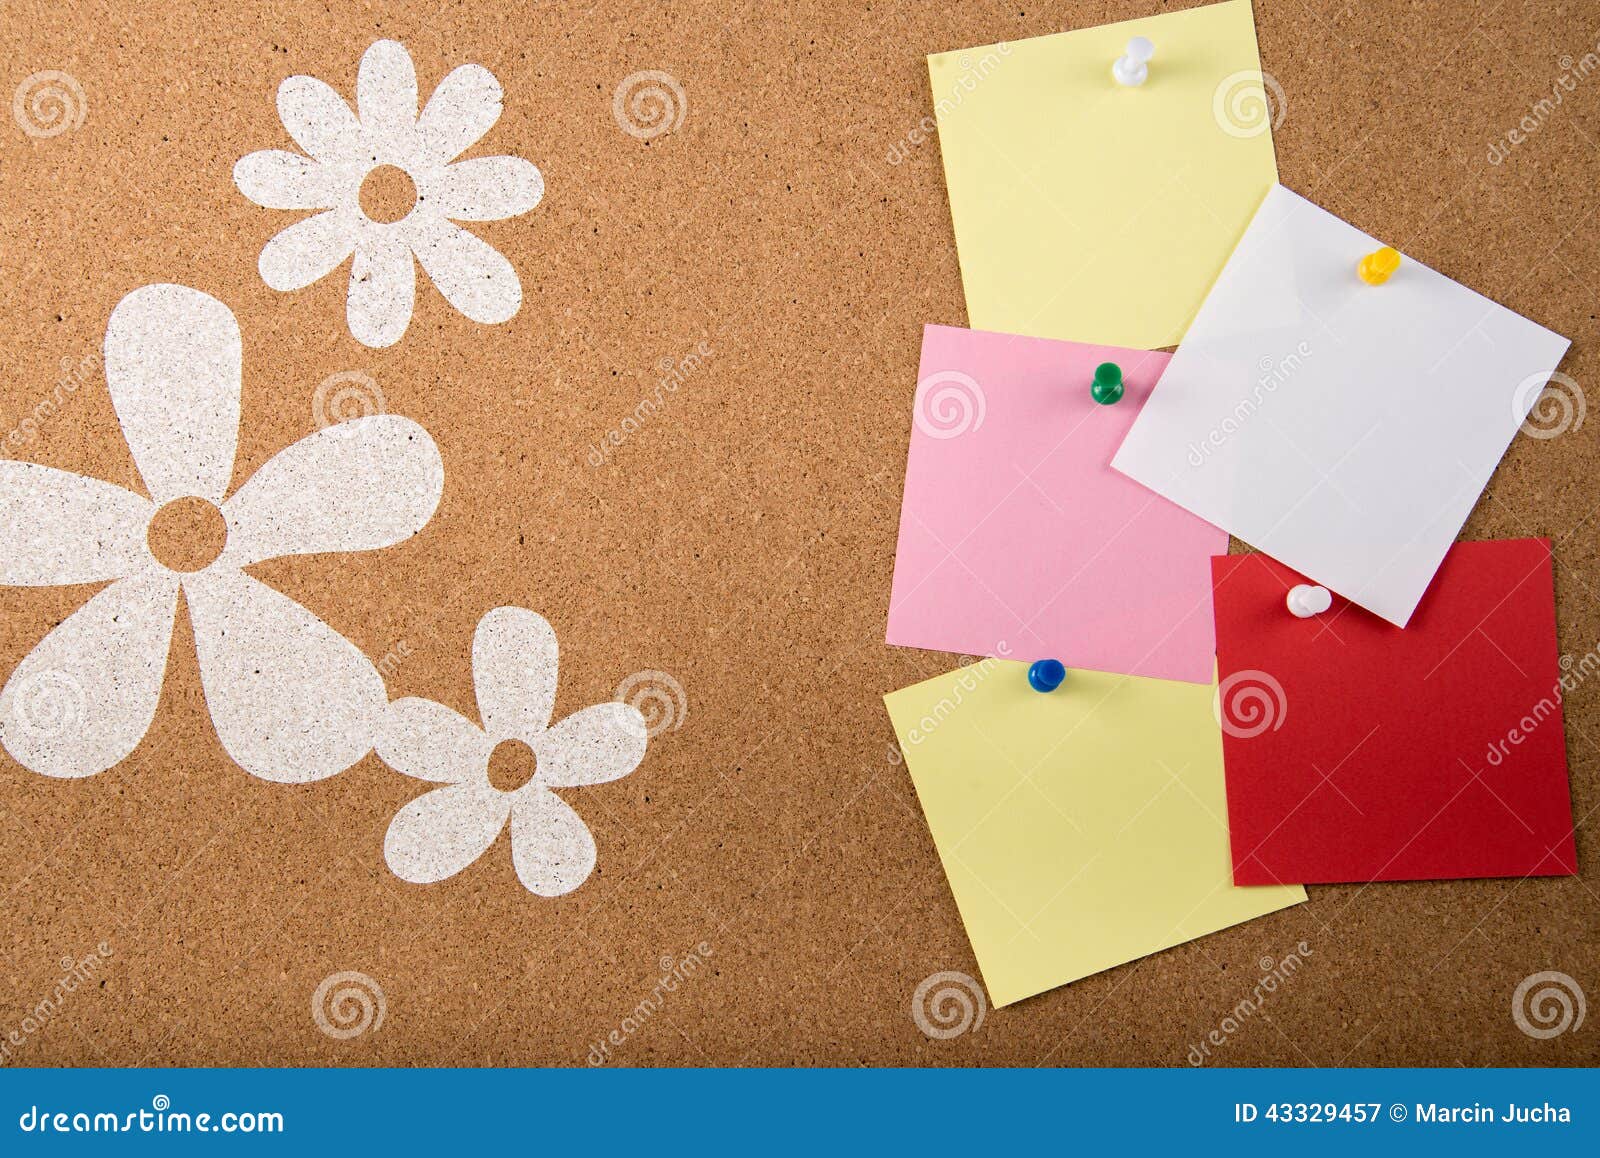 Sticky Note Memo Card On Board Stock Illustration - Image ...